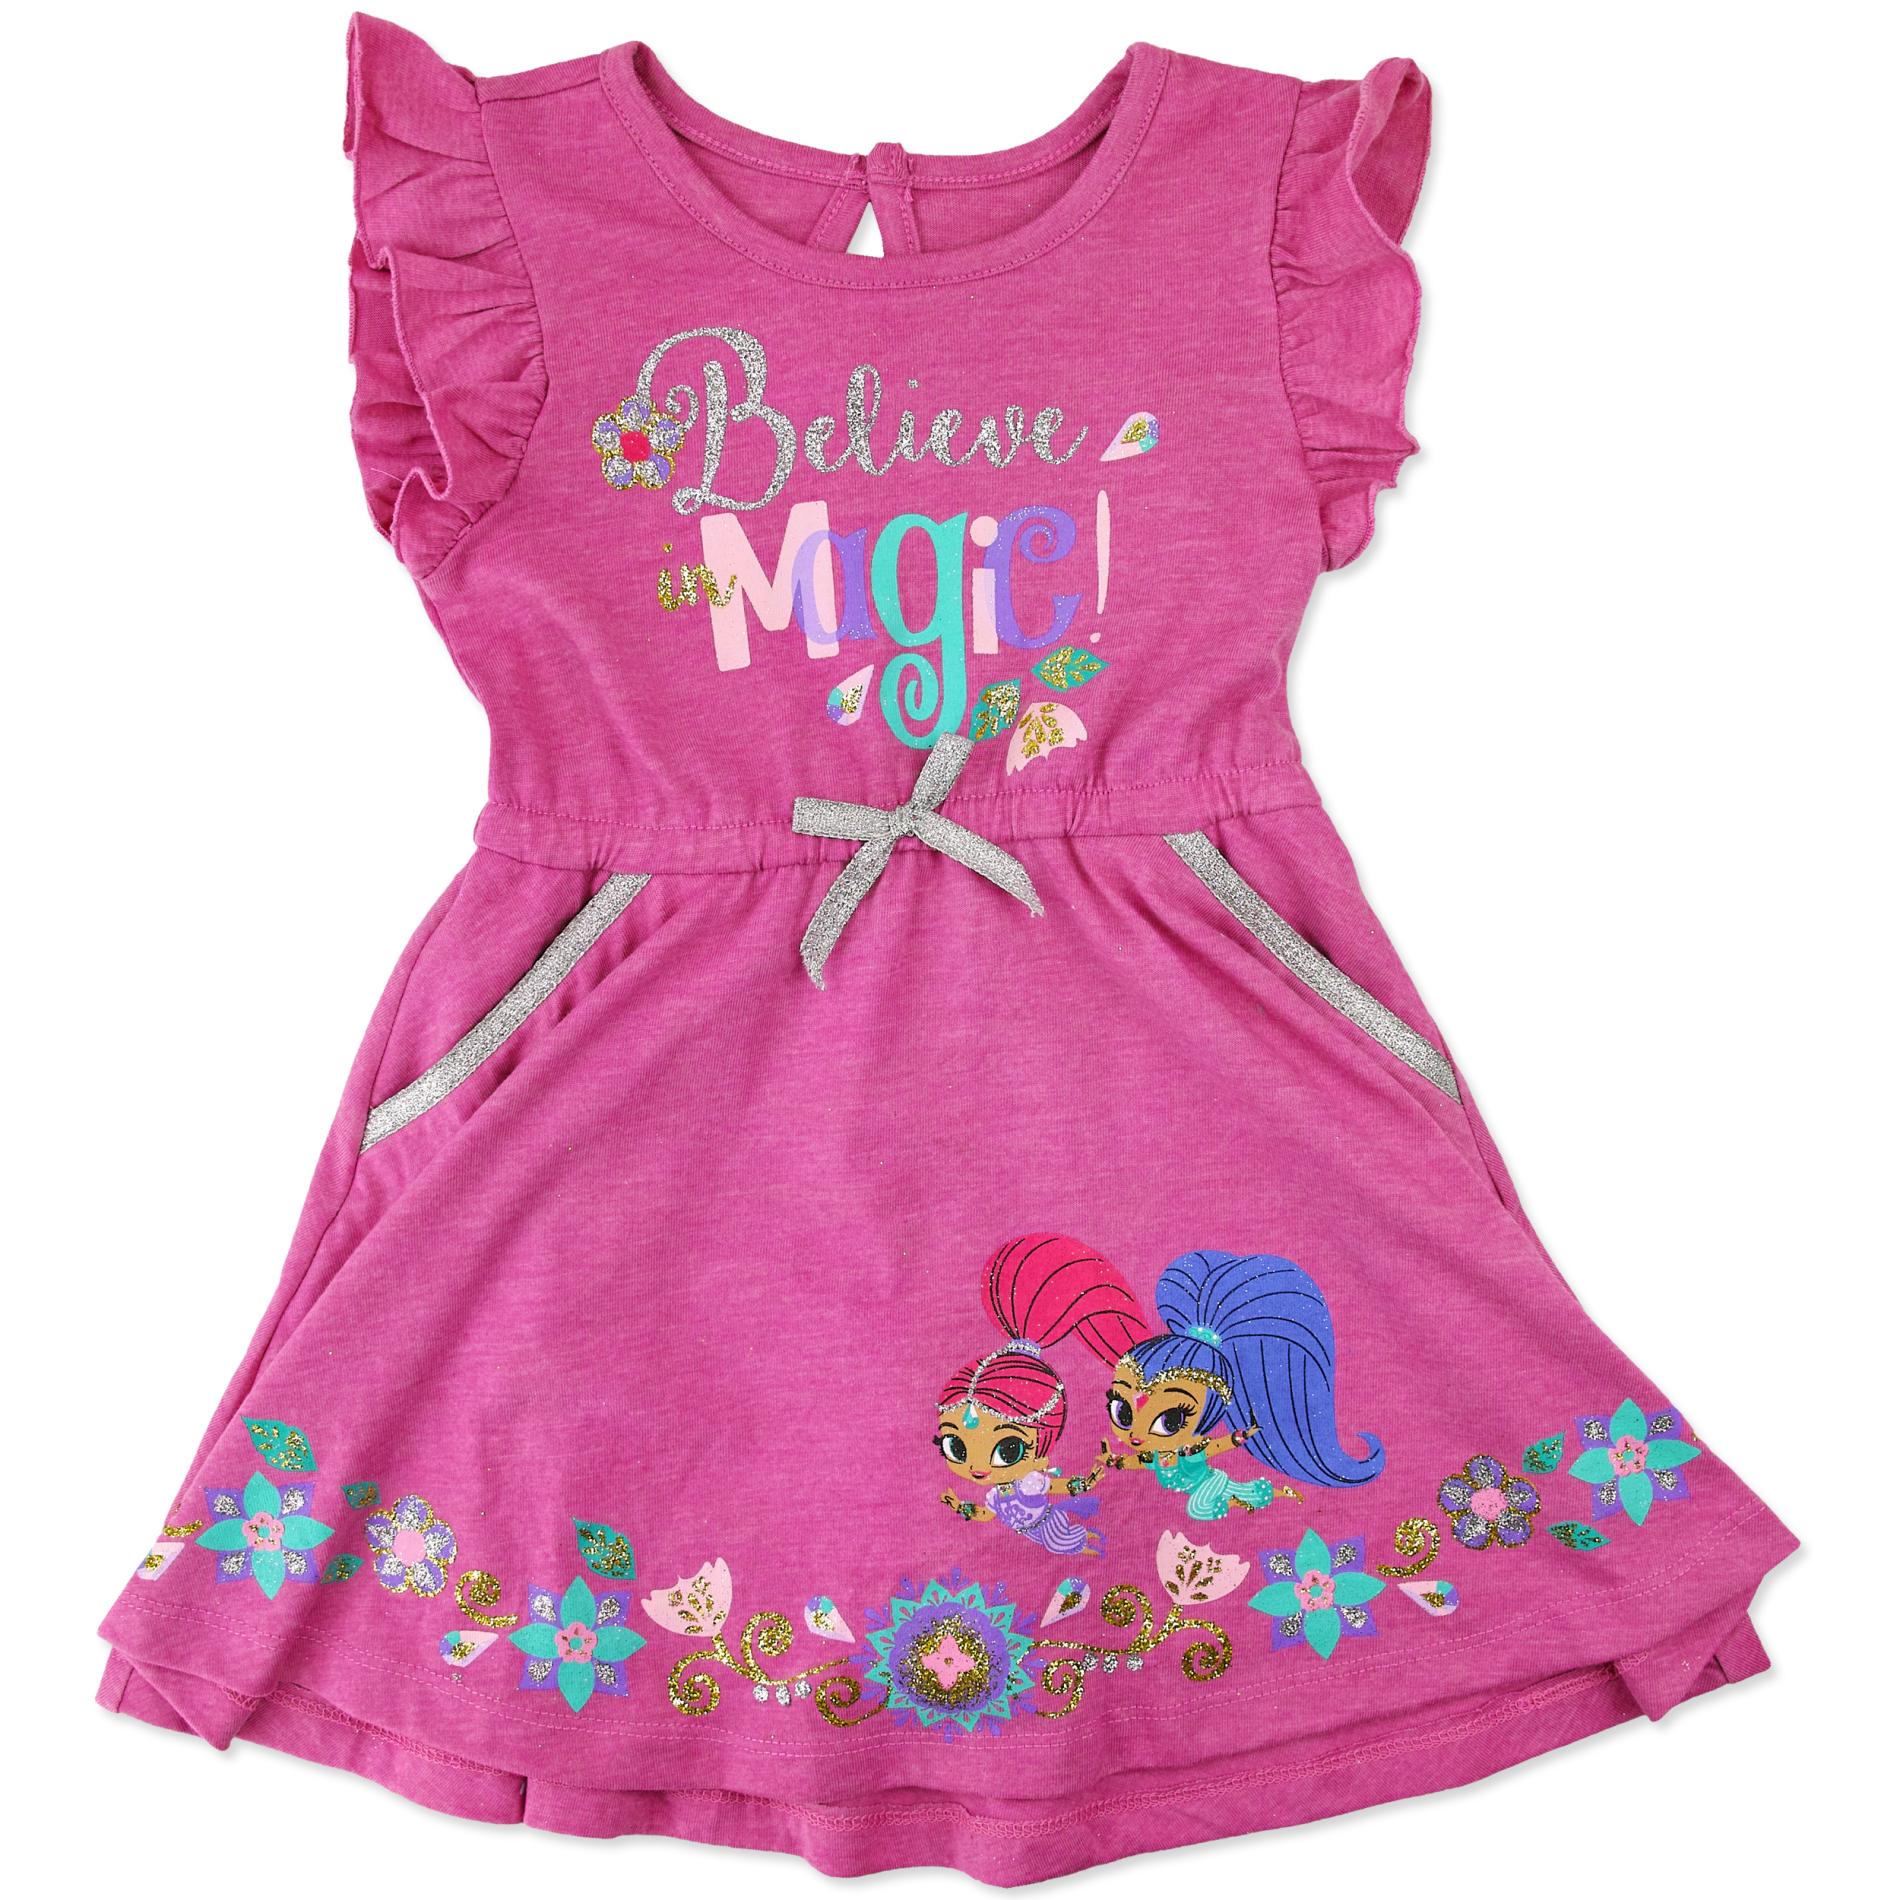 Nickelodeon Shimmer and Shine Toddler Girls' Dress